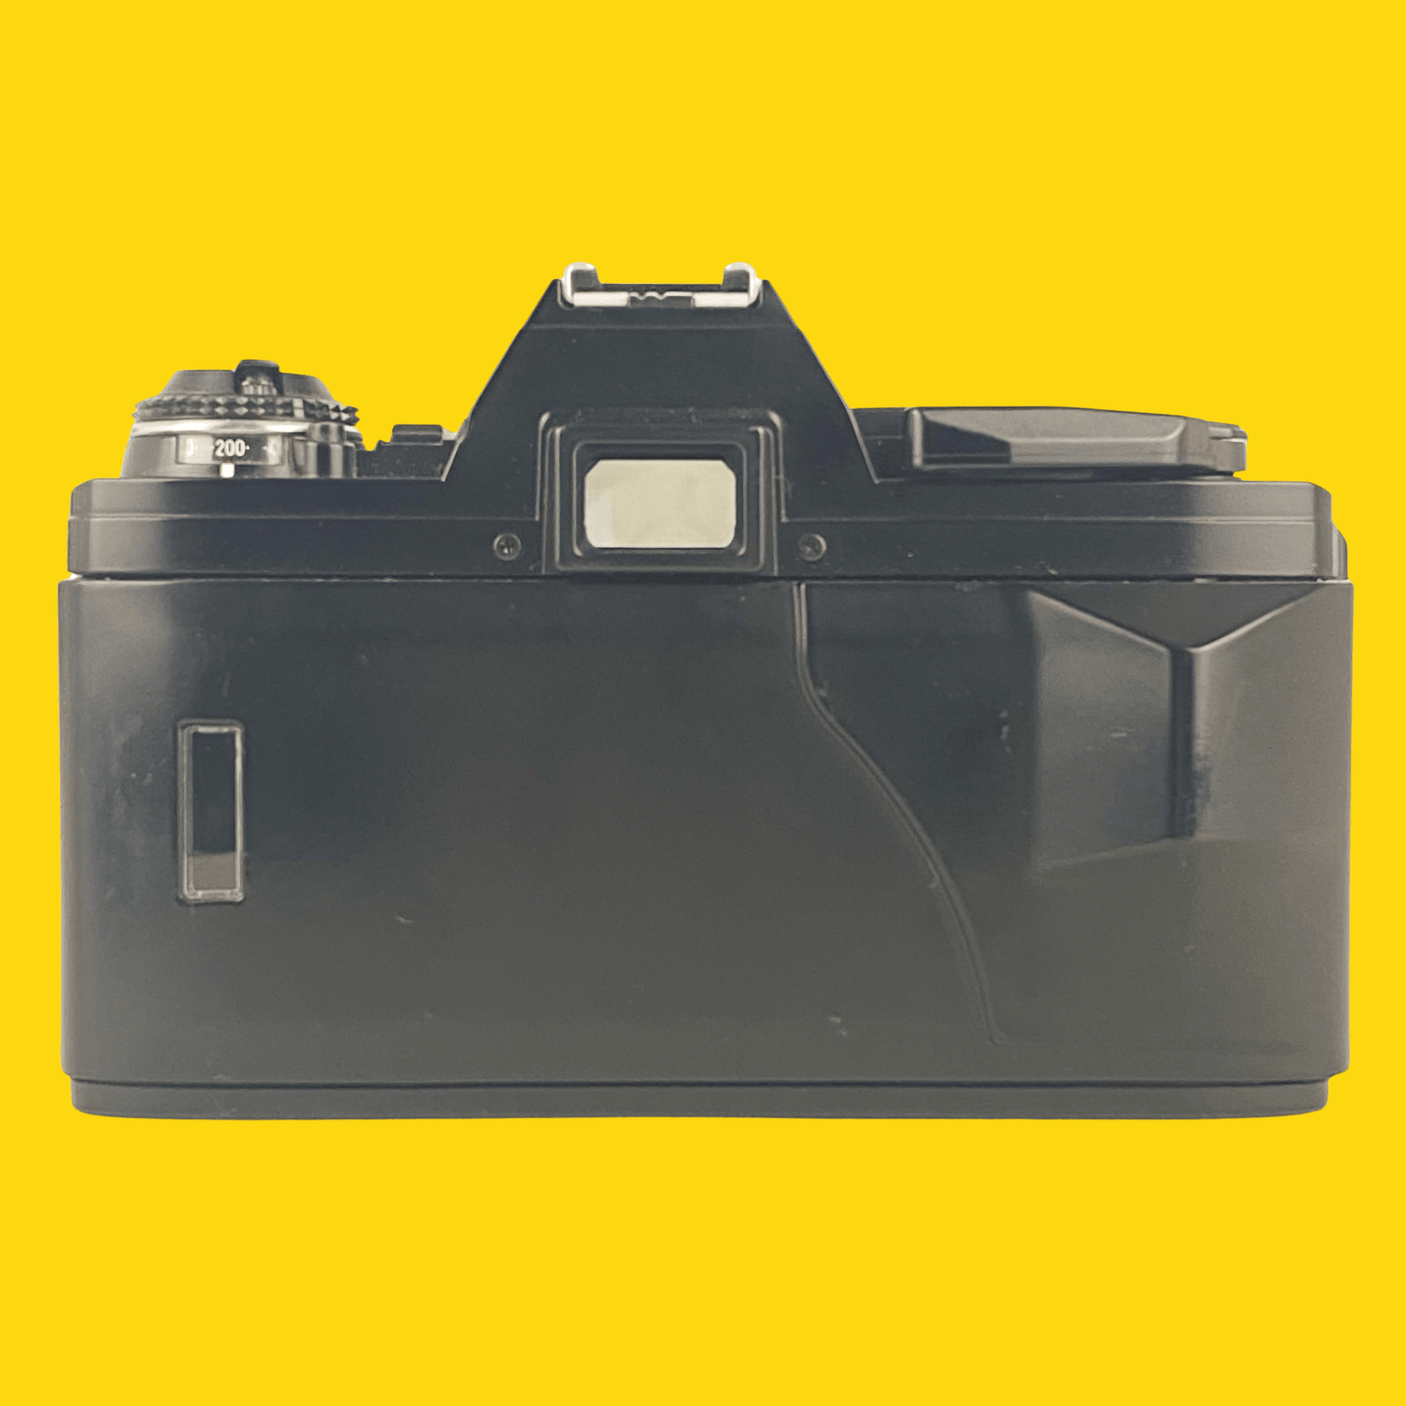 Minolta X-370s 35mm SLR Film Camera w/ Prime Lens